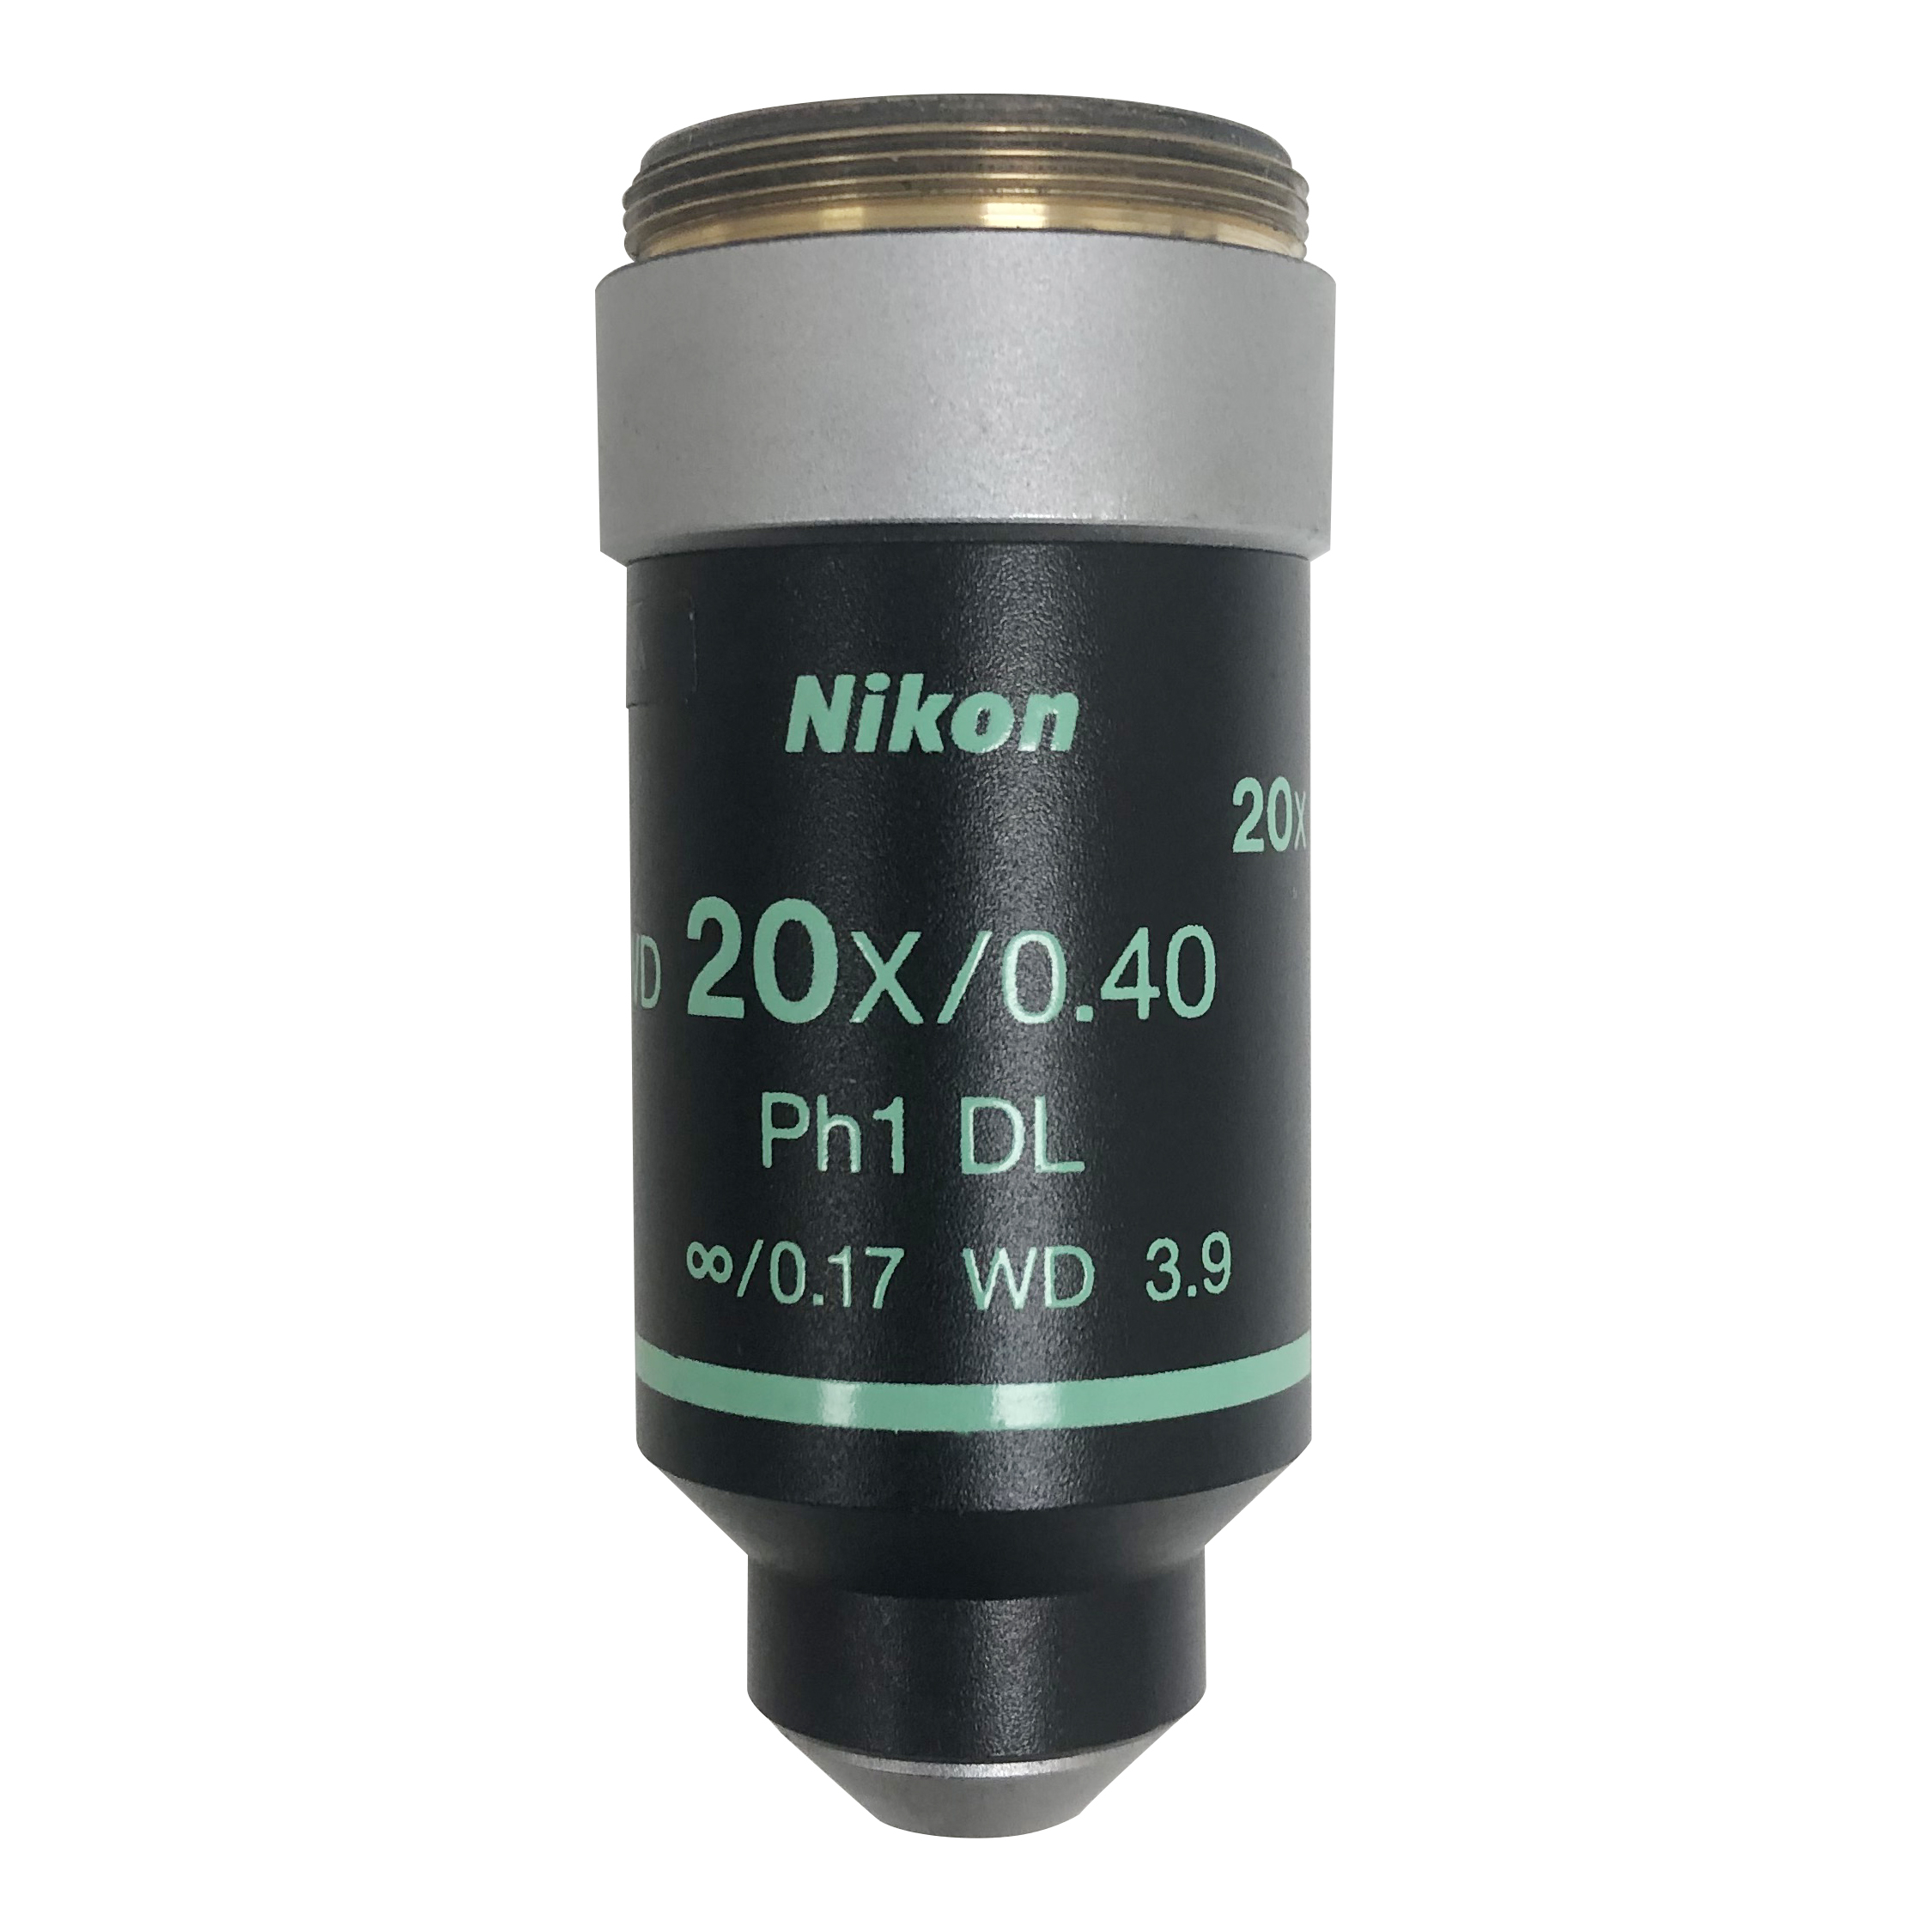 Nikon CFI LWD 20x/0.40 Infinity Microscope Objective Hero